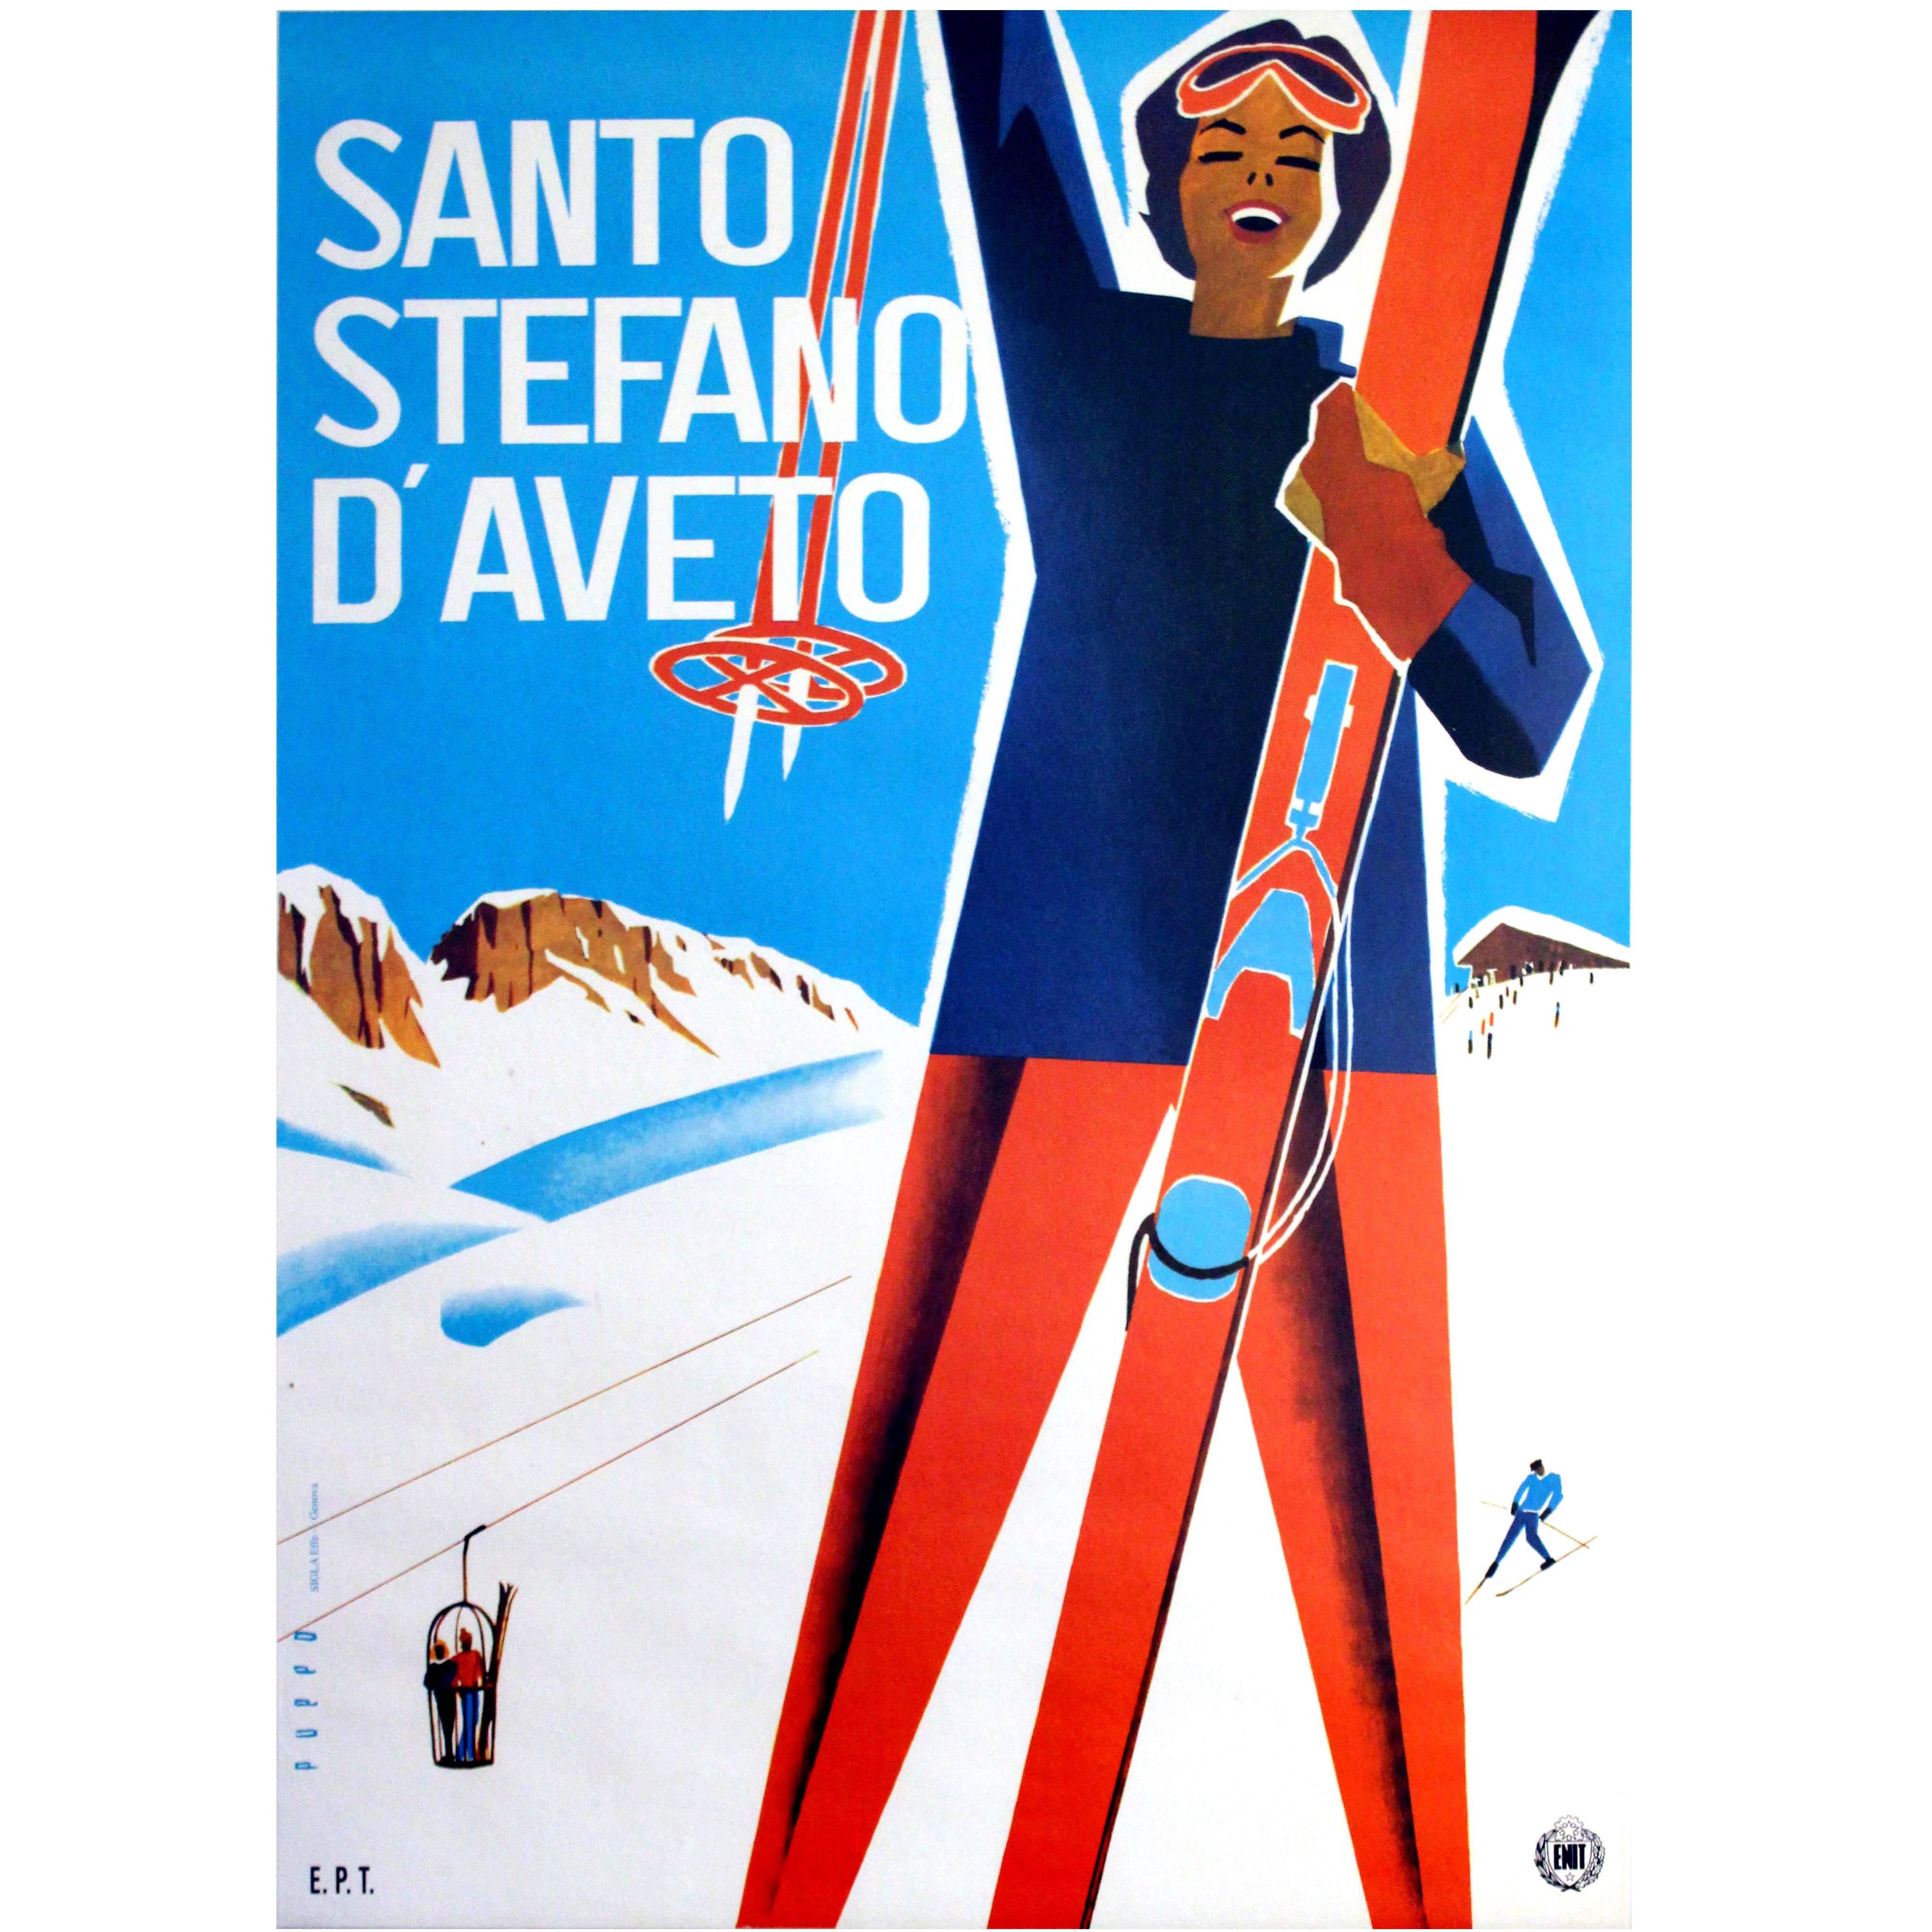 Original Vintage ENIT Skiing Poster Advertising Santo Stefano d'Aveto, Italy